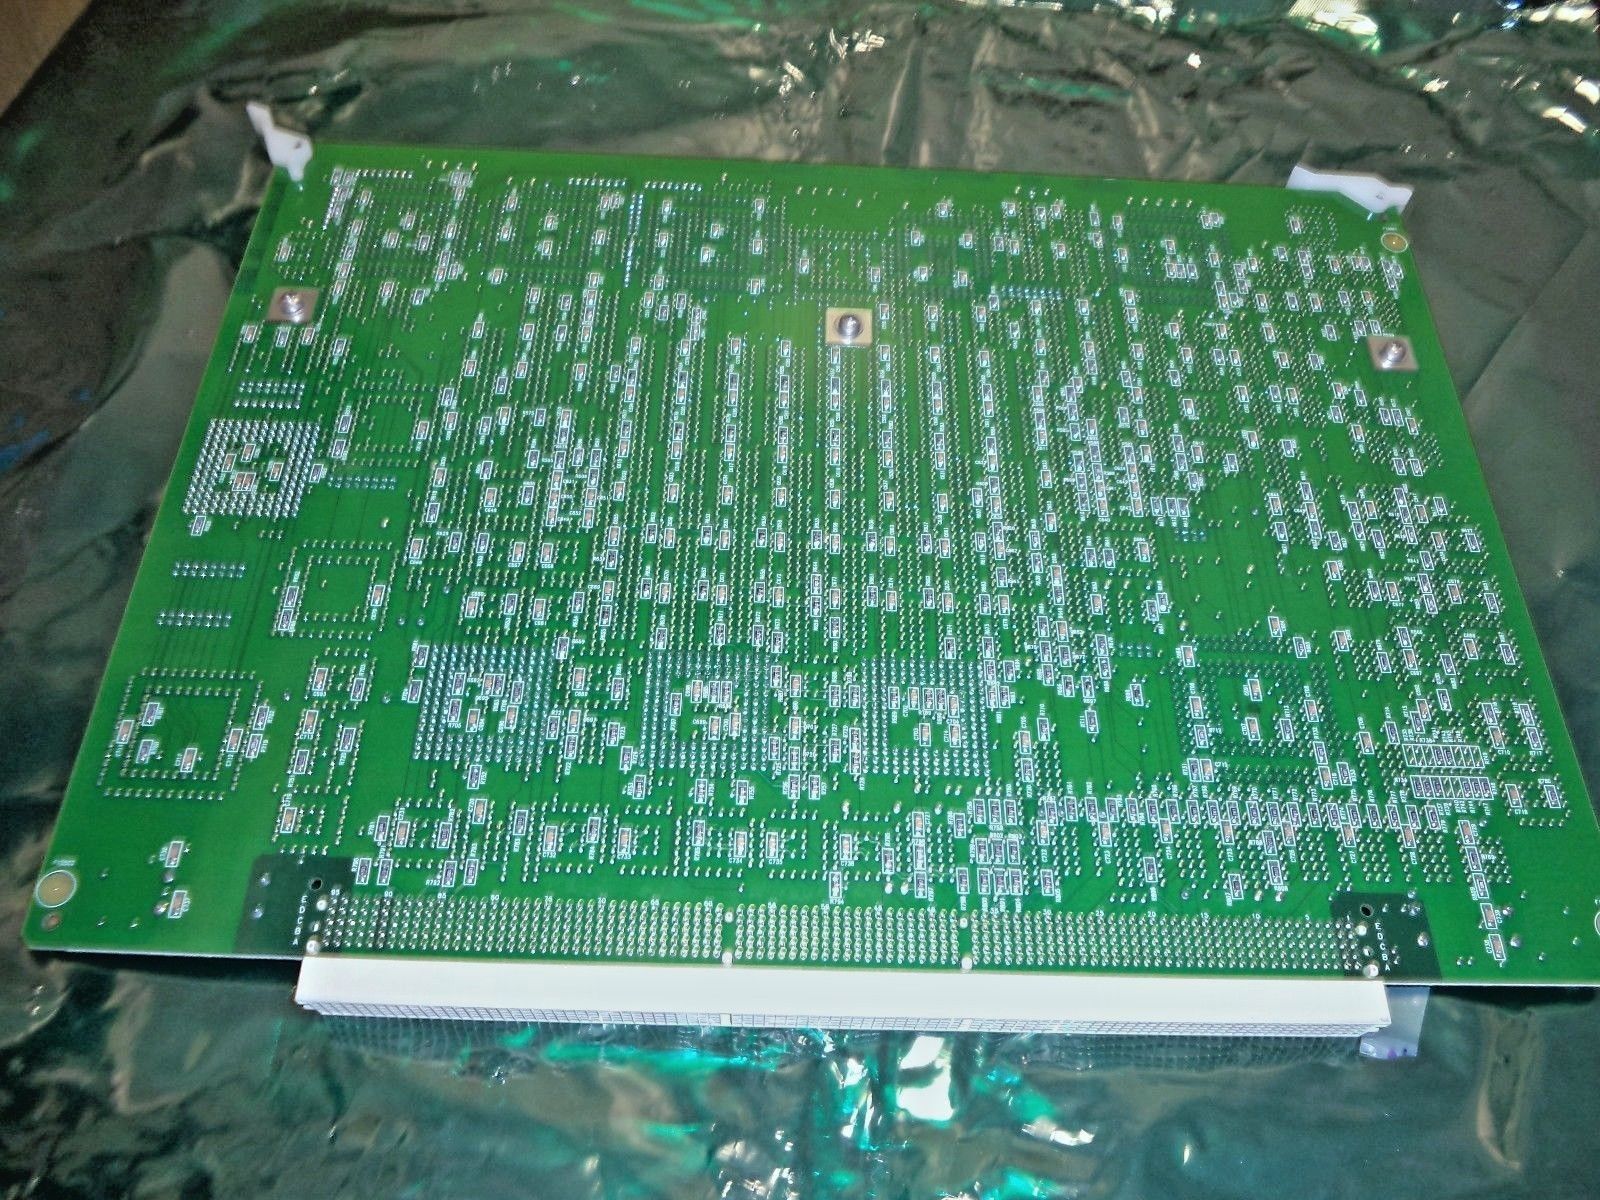 Philips ATL HDI 5000 Ultrasound PSP2 Board (PN: 7500-0714-09F)